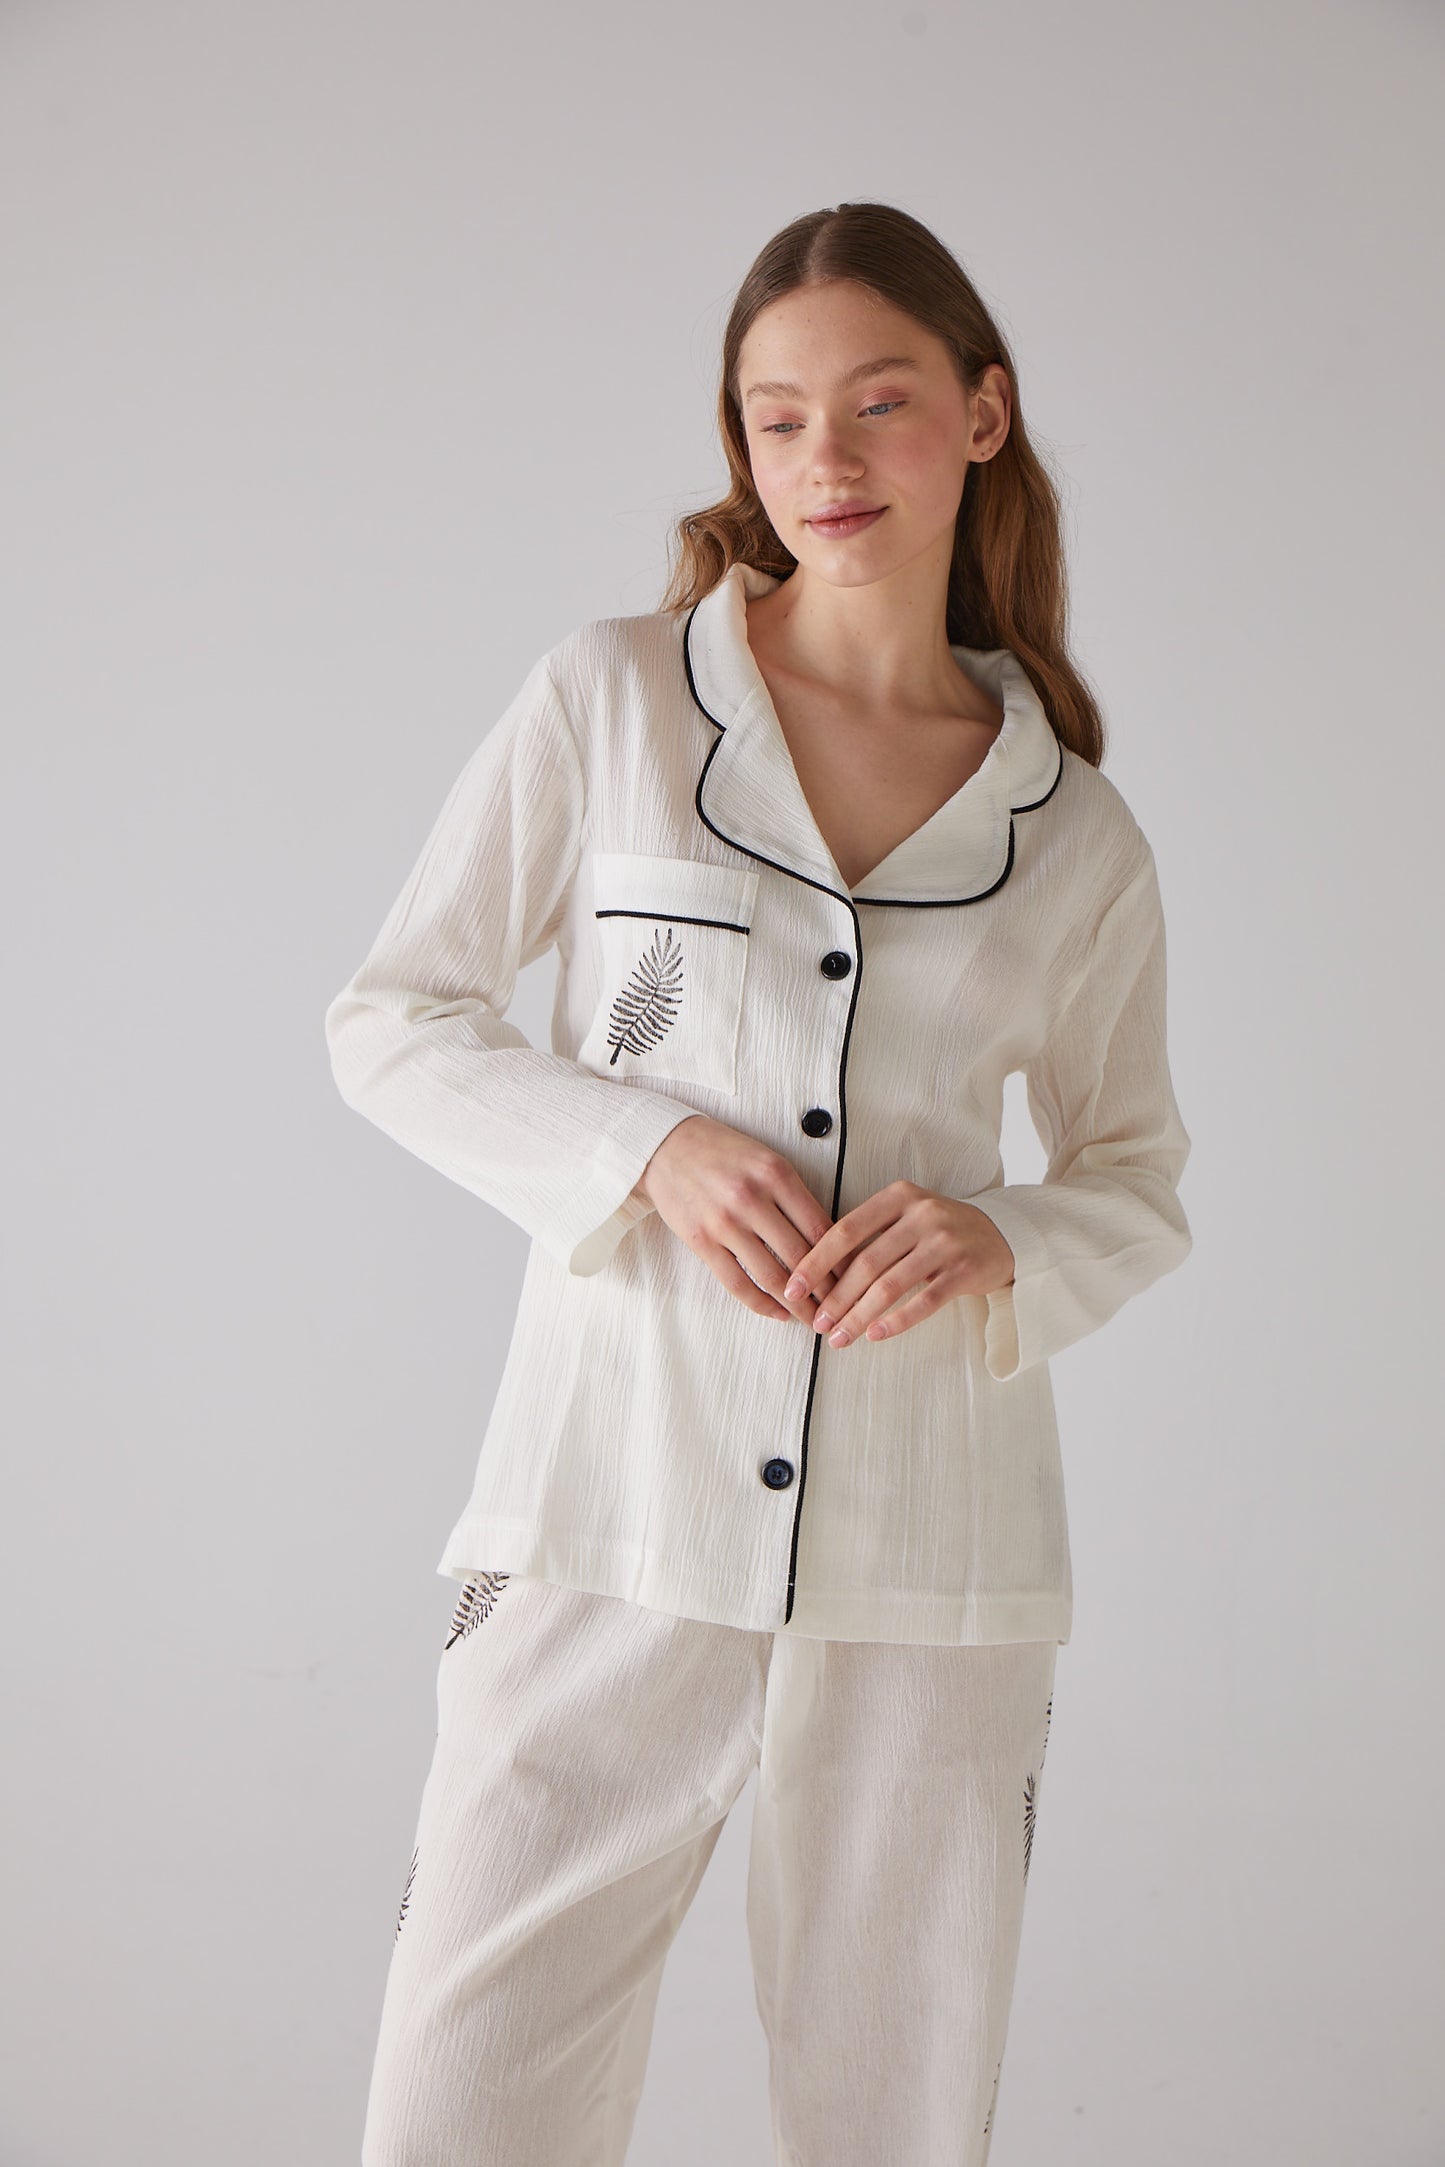 Leaf Pattern White Long Pyjama Set - 100% Organic Cotton